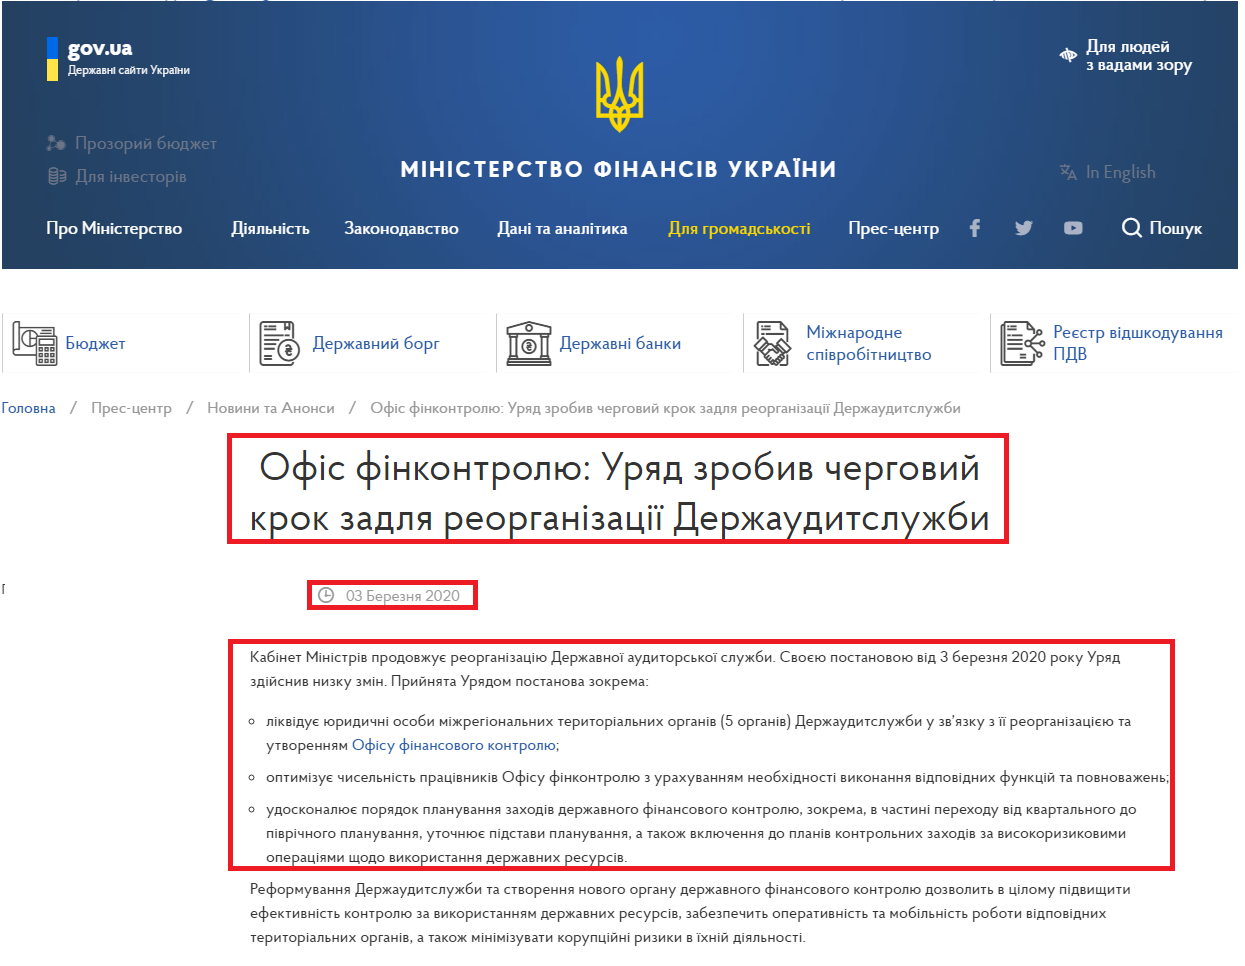 https://mof.gov.ua/uk/news/ofis_finkontroliu_uriad_zrobiv_chergovii_krok_zadlia_reorganizatsii_derzhauditsluzhbi-2062